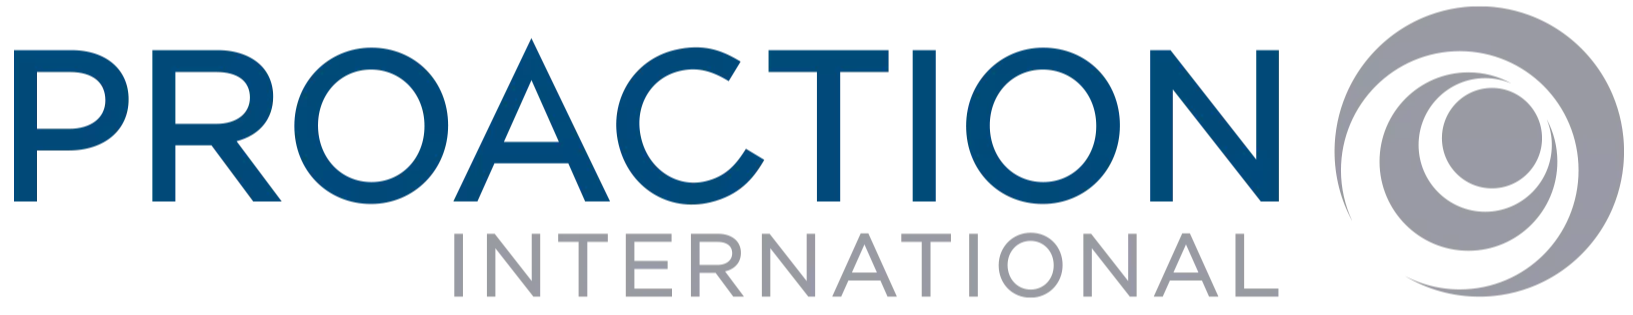 proaction-international-logo-rgb